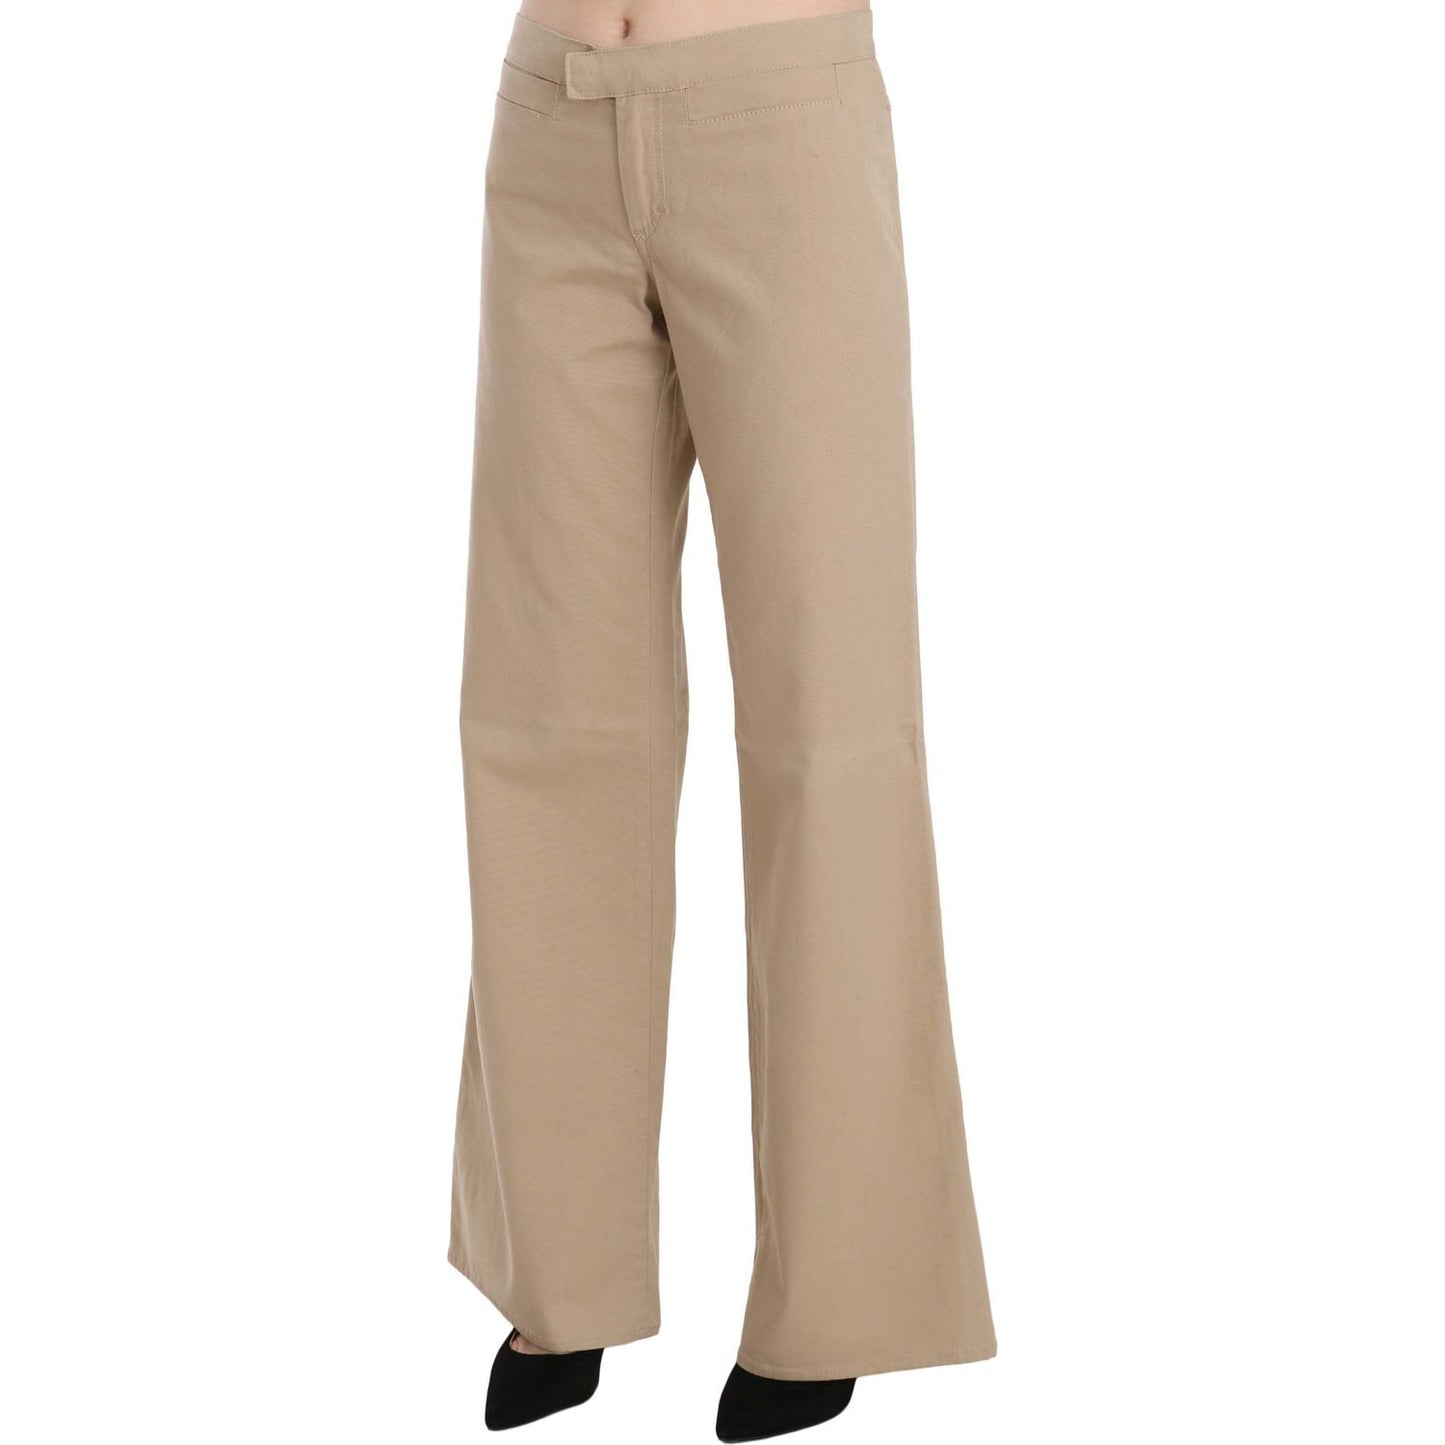 Just Cavalli Beige Mid Waist Flared Luxury Trousers beige-cotton-mid-waist-flared-trousers-pants Jeans & Pants IMG_6094-scaled-38b34782-a0b.jpg